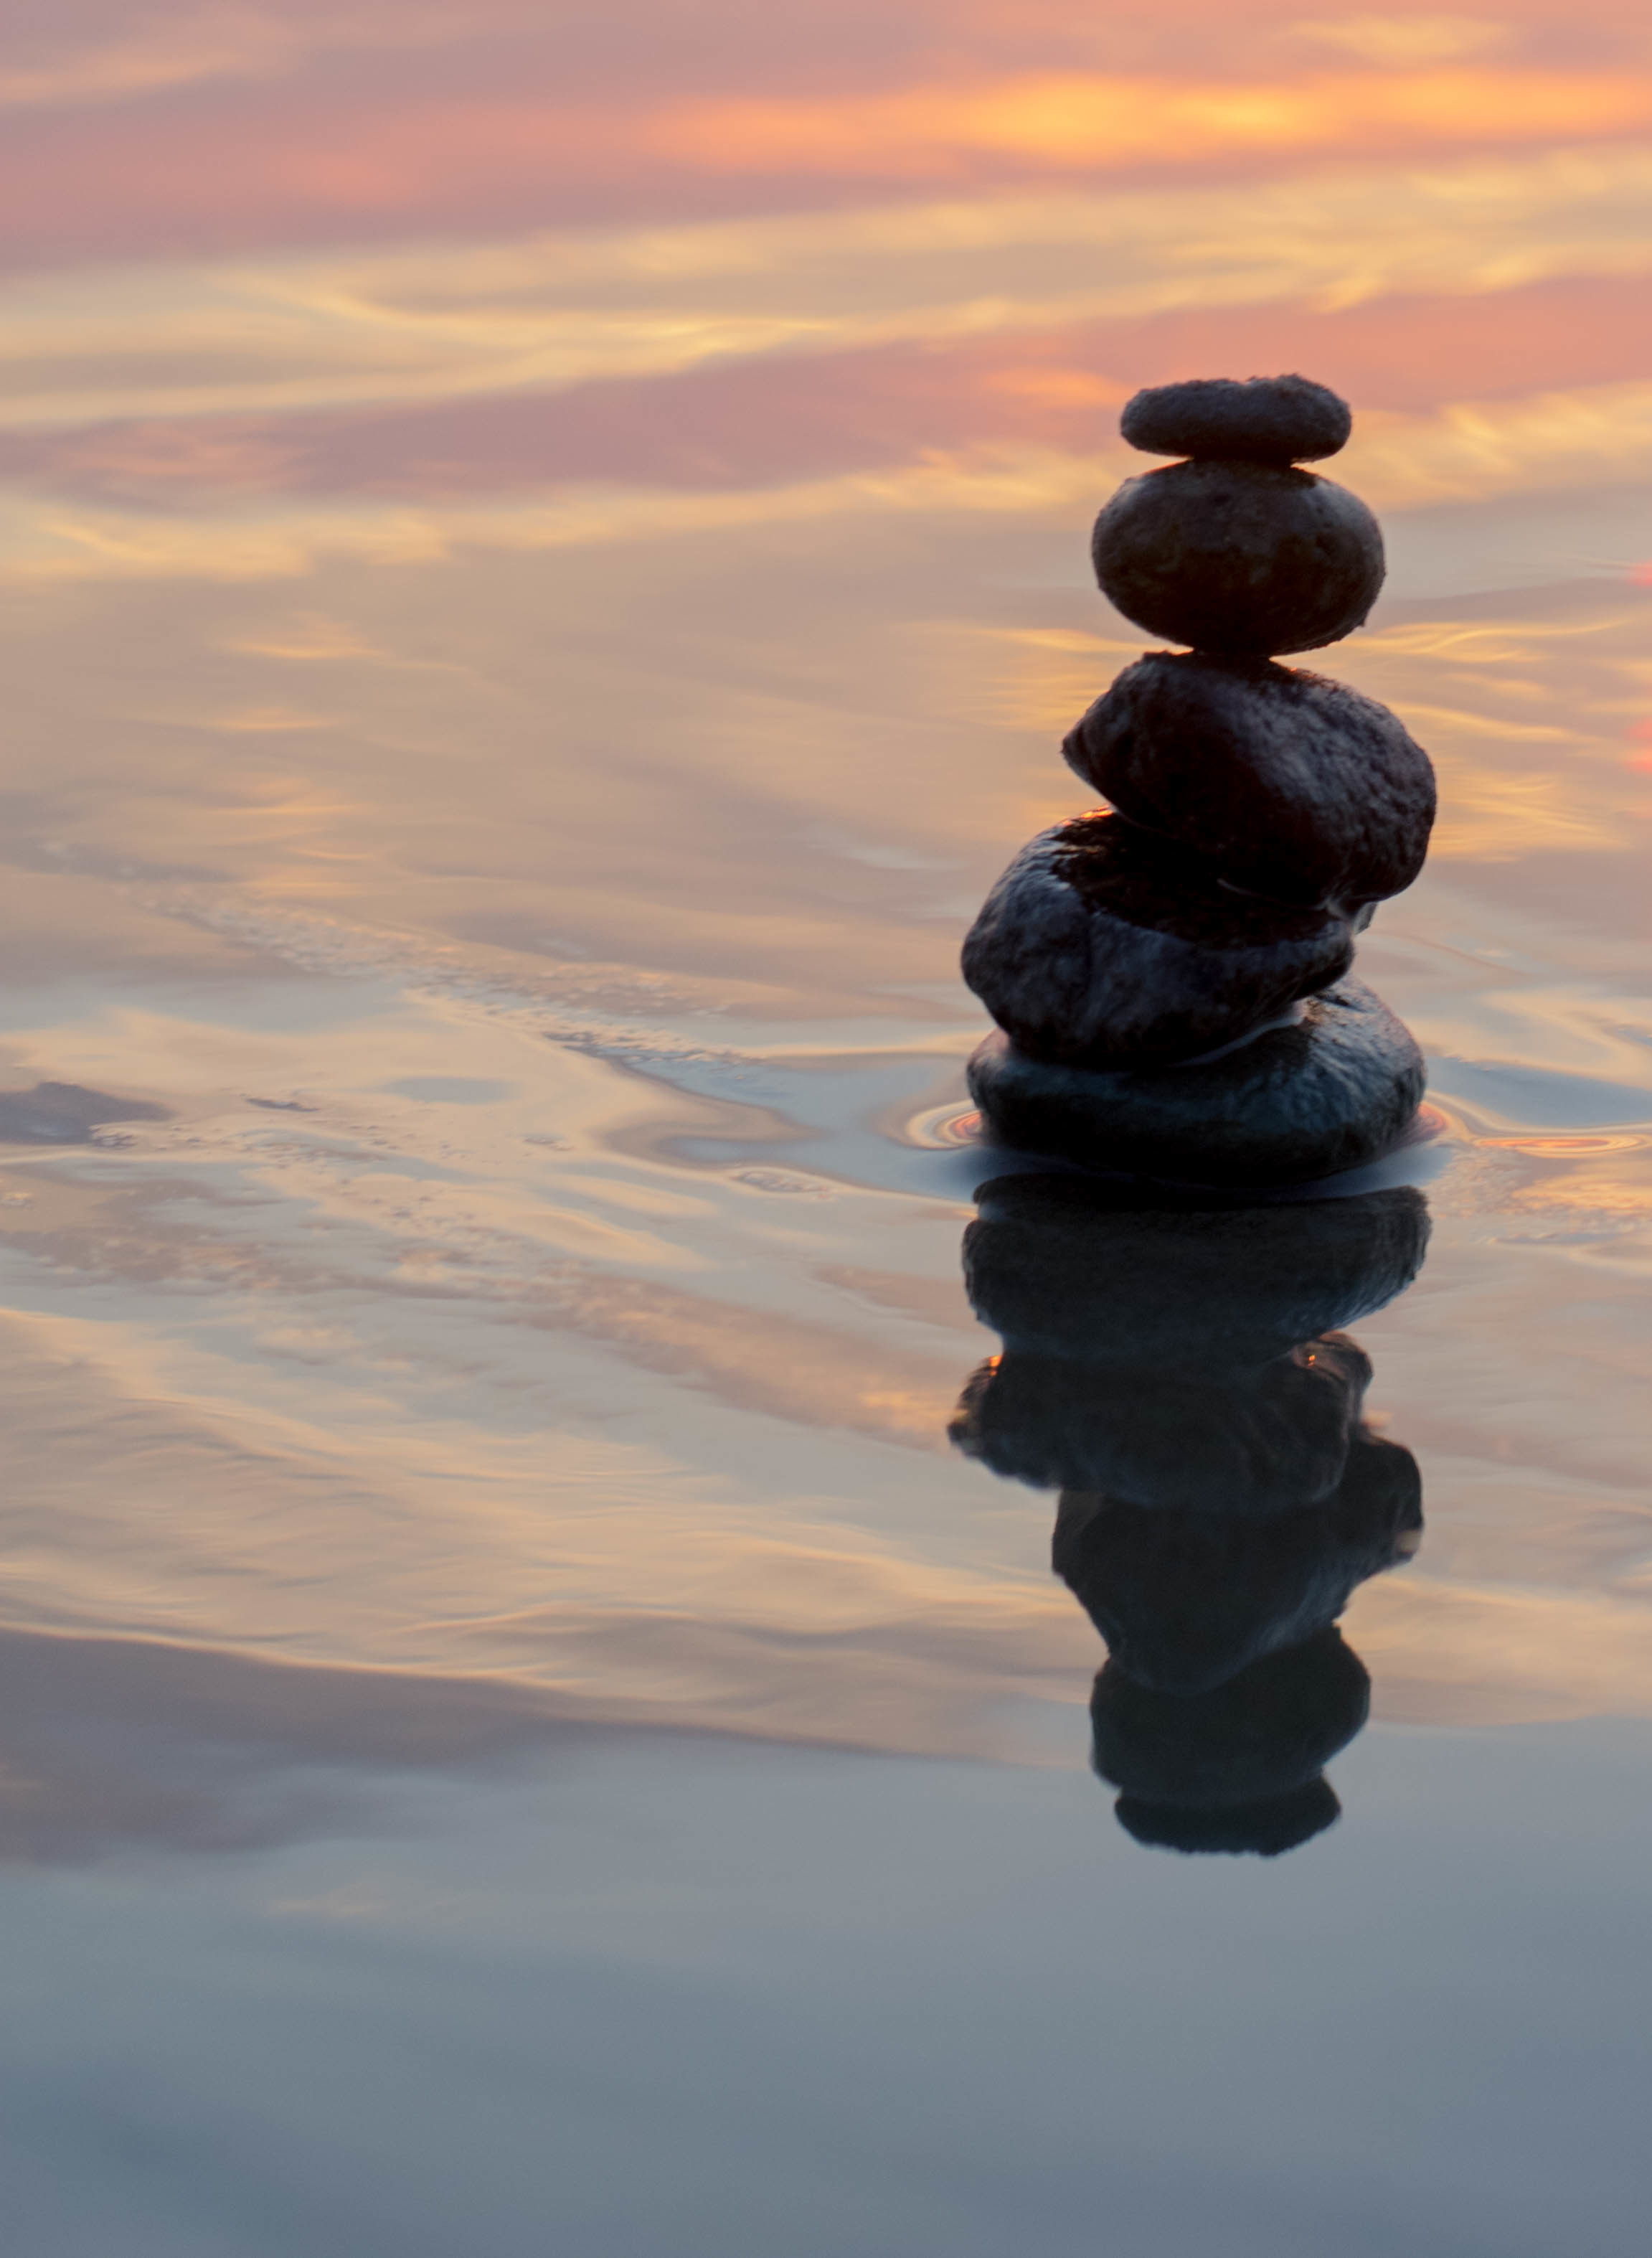 balancing rocks as a metaphor for the nervous system